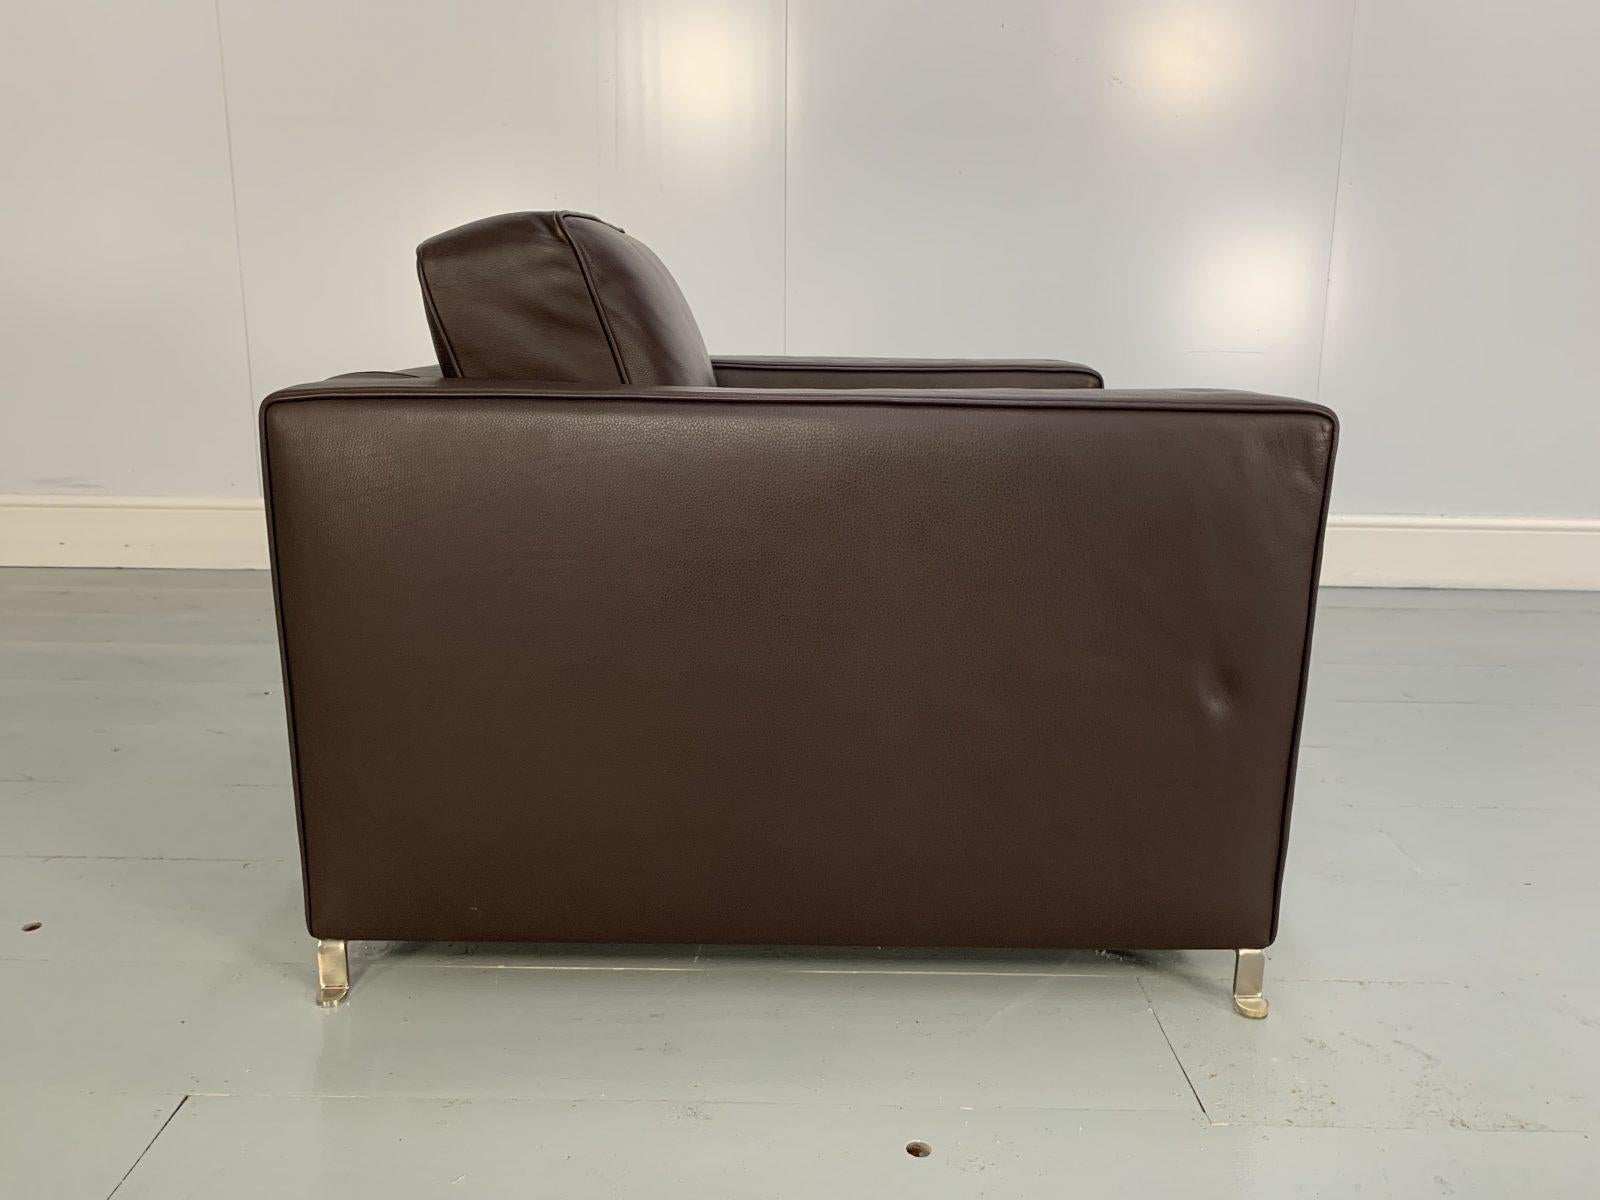 Flexform “Bob” Movement Armchair in Dark Brown Leather In Good Condition For Sale In Barrowford, GB